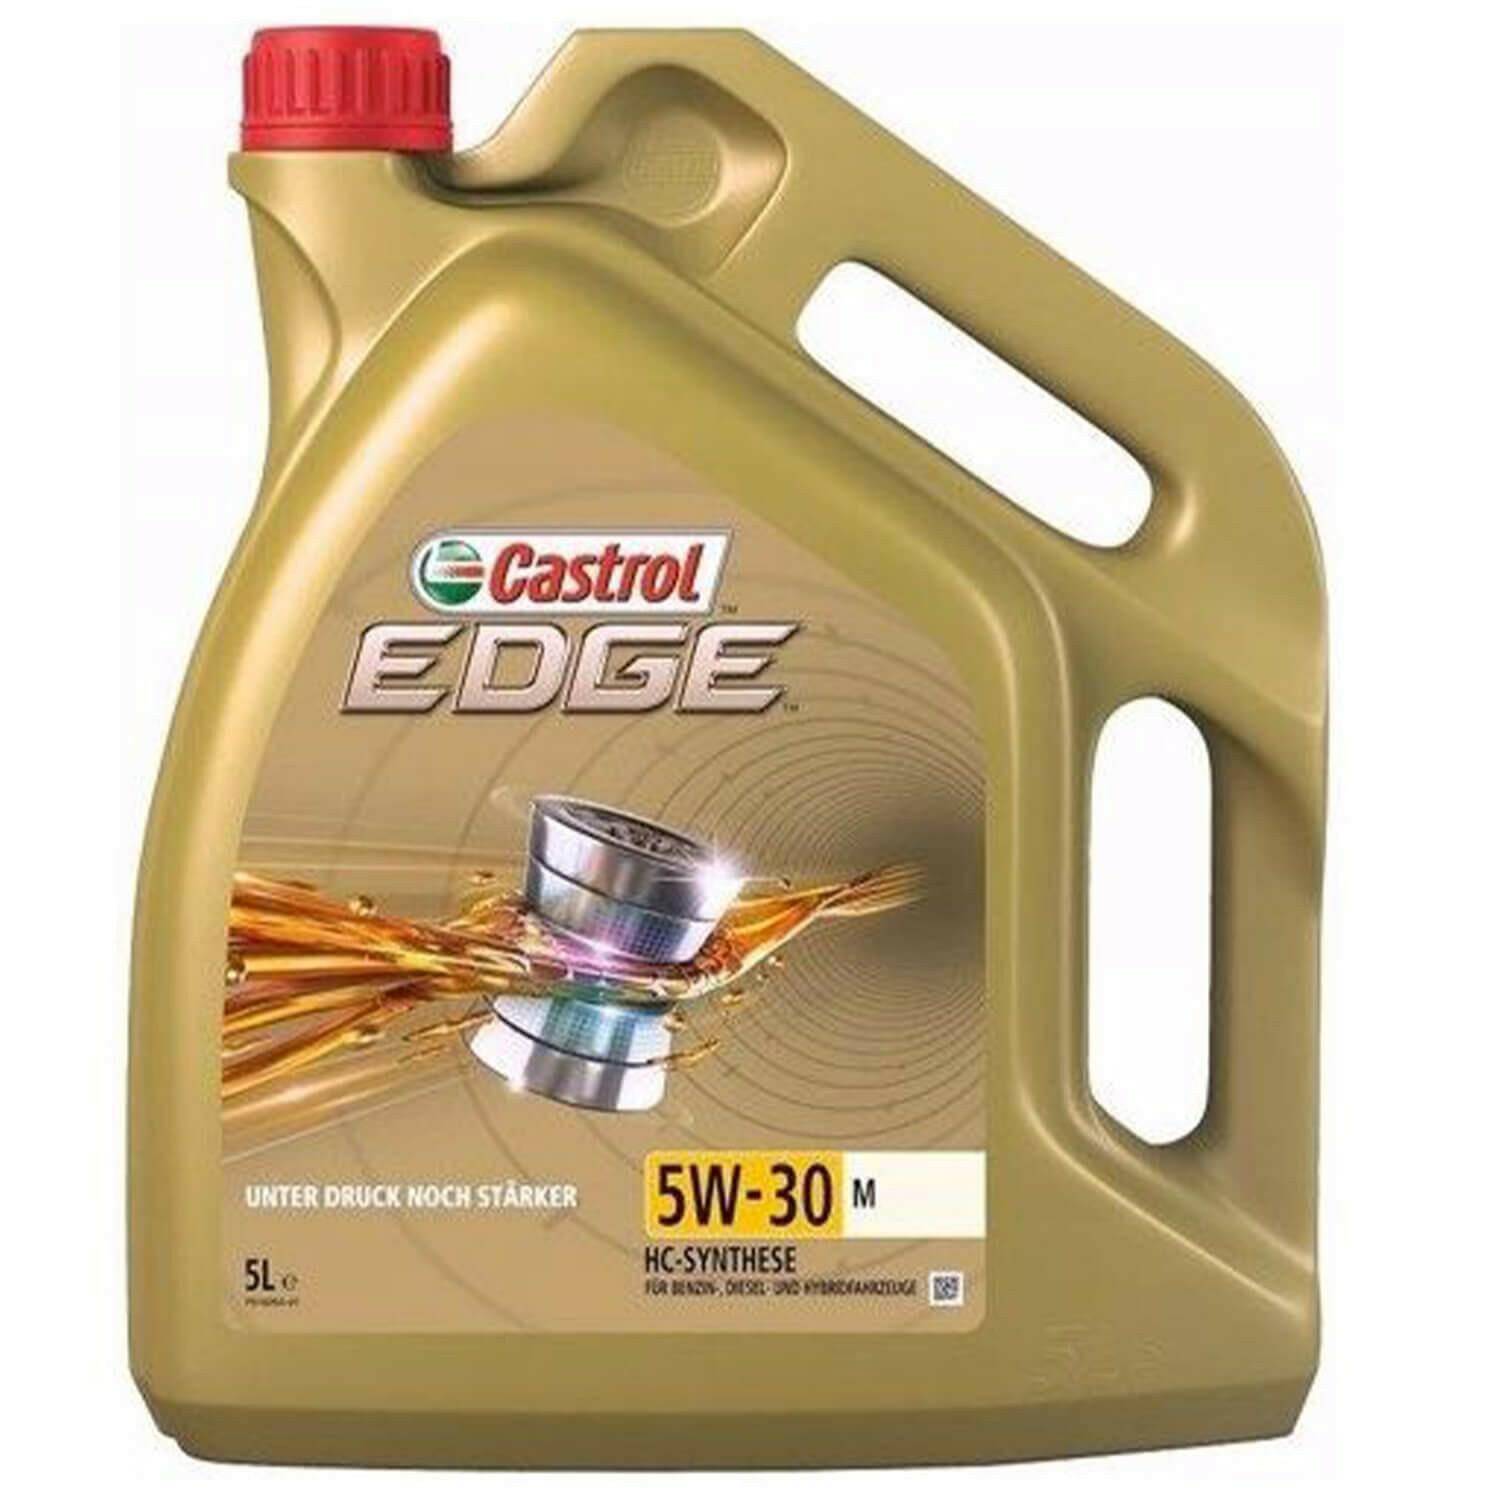 Castrol Edge 5w30 M   5L